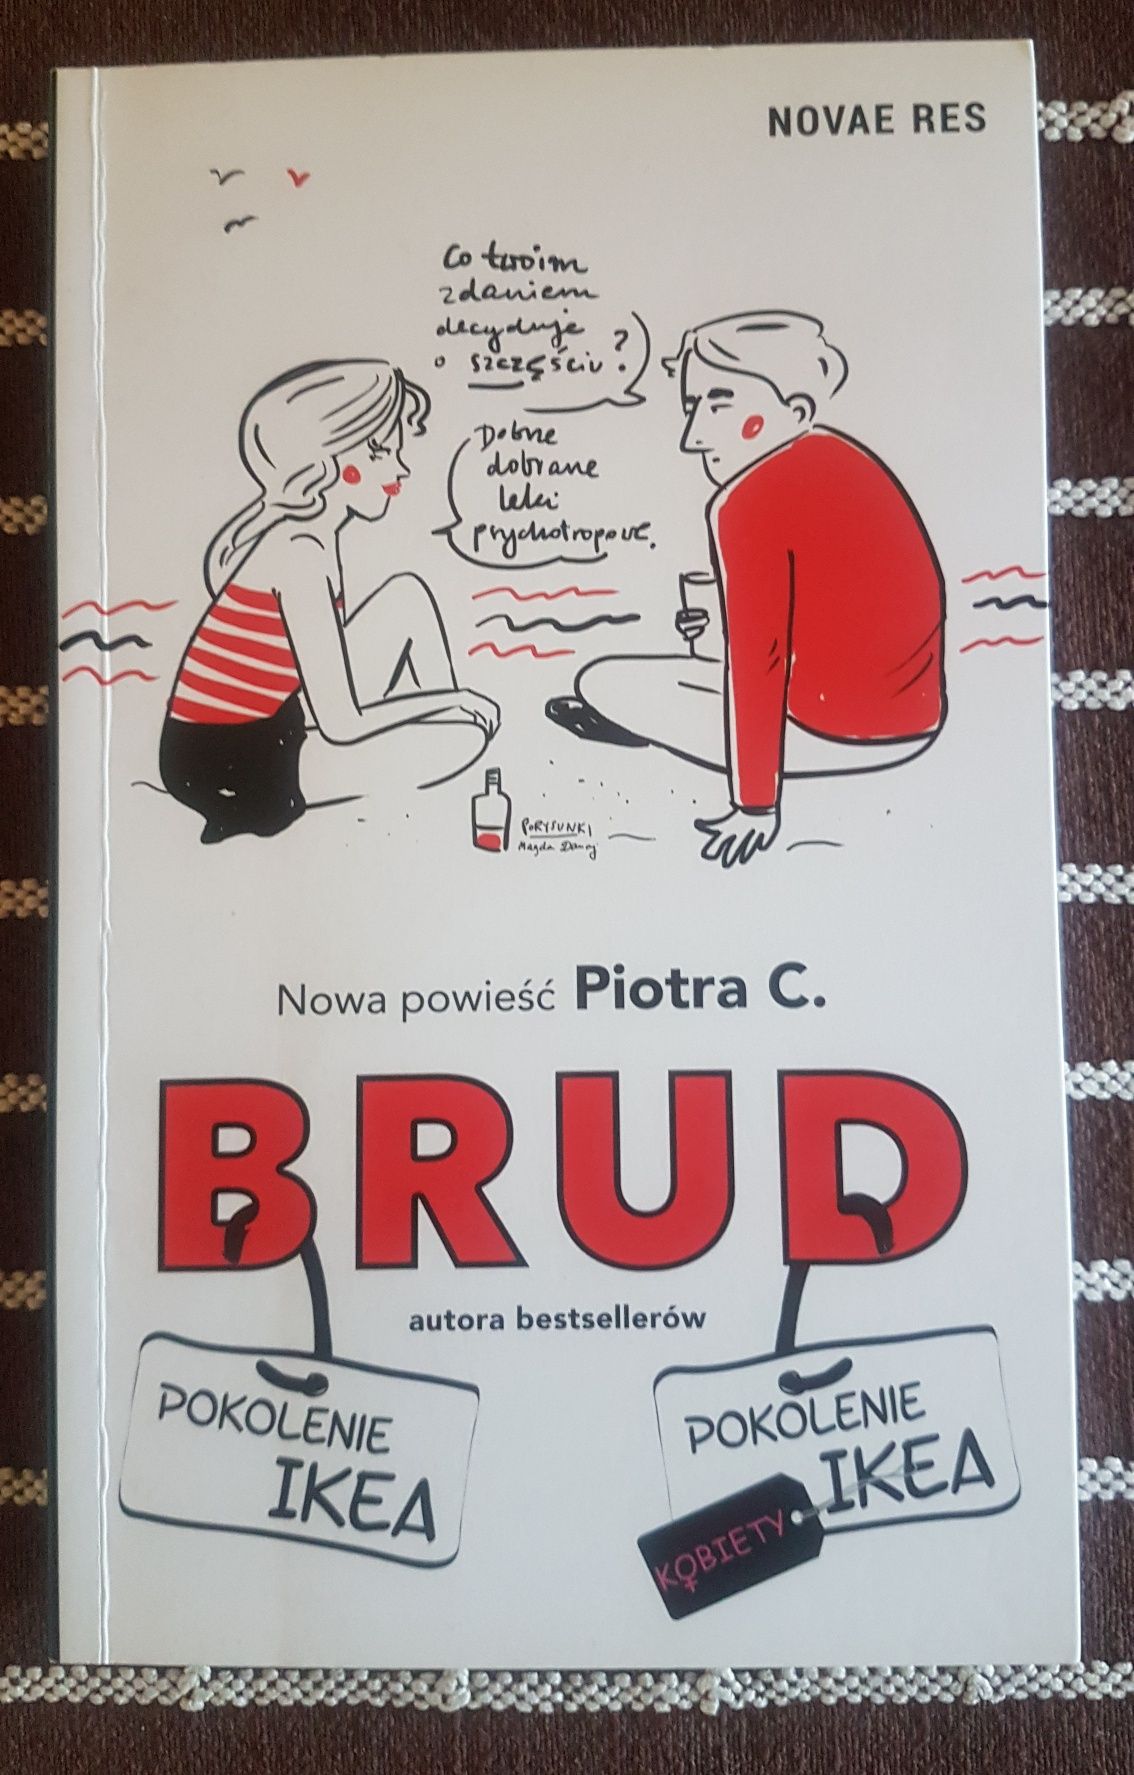 Piotr C. "Brud" - książka